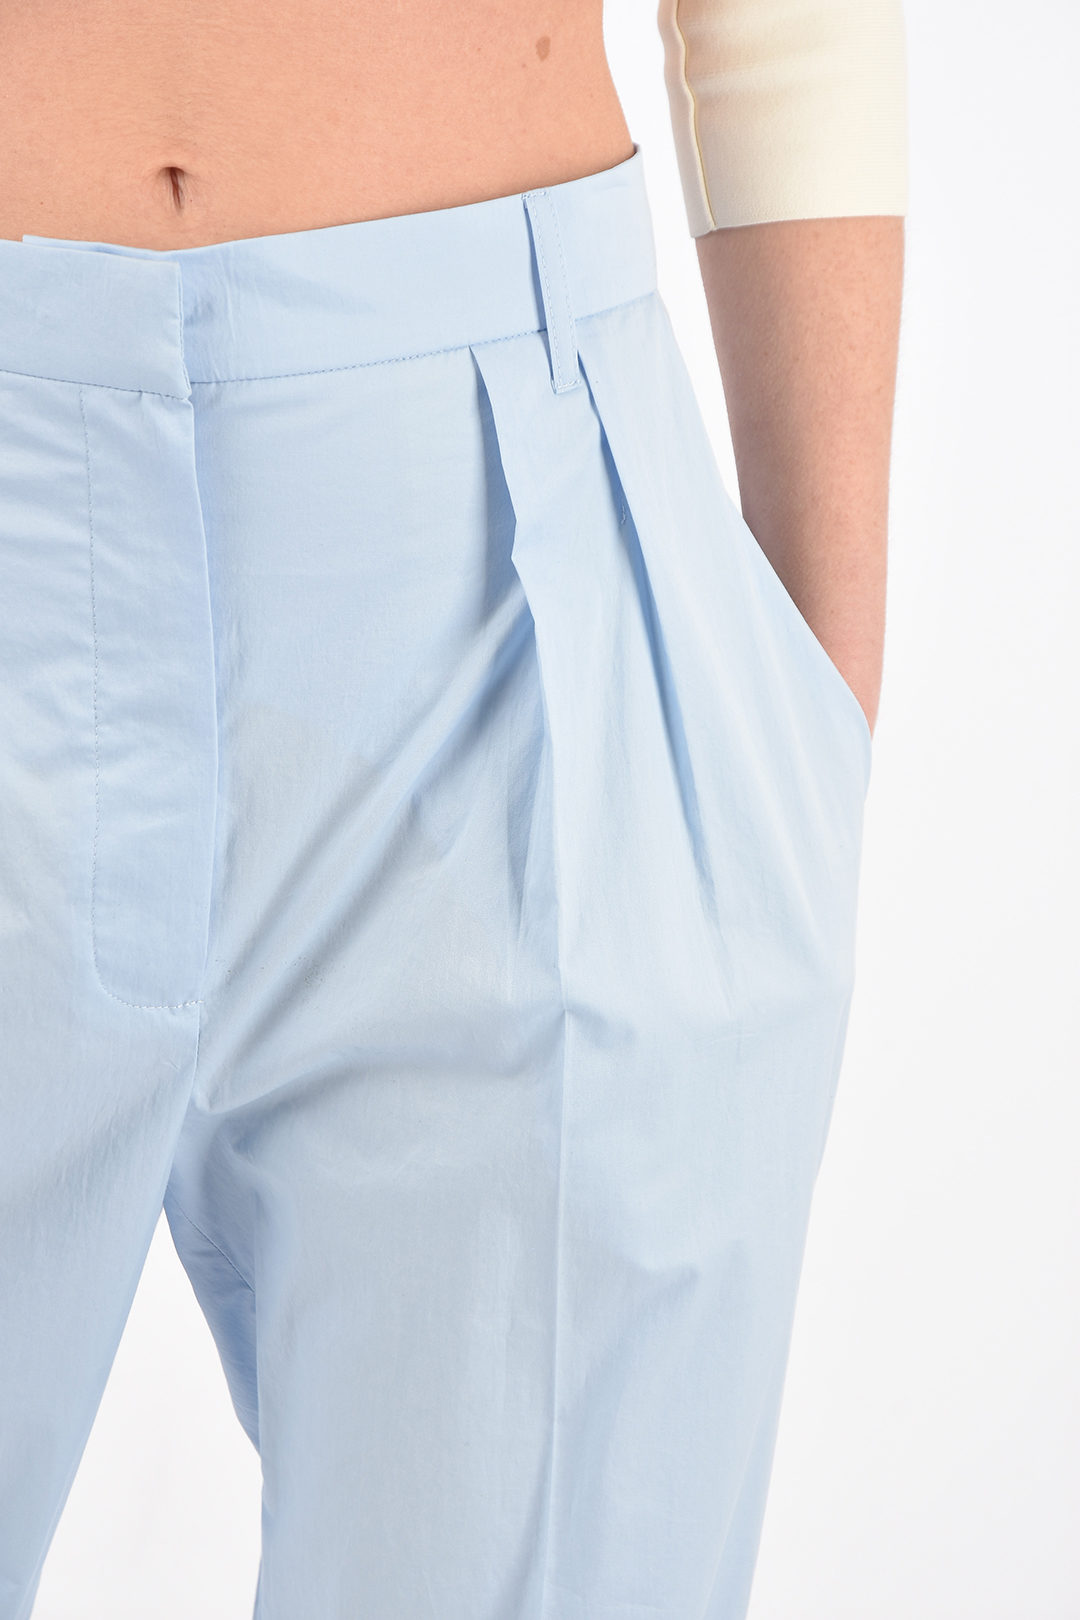 UK Women High Waist Paperbag Cigaratte Pleated Trousers Ladies Pants Size  8-16 | eBay